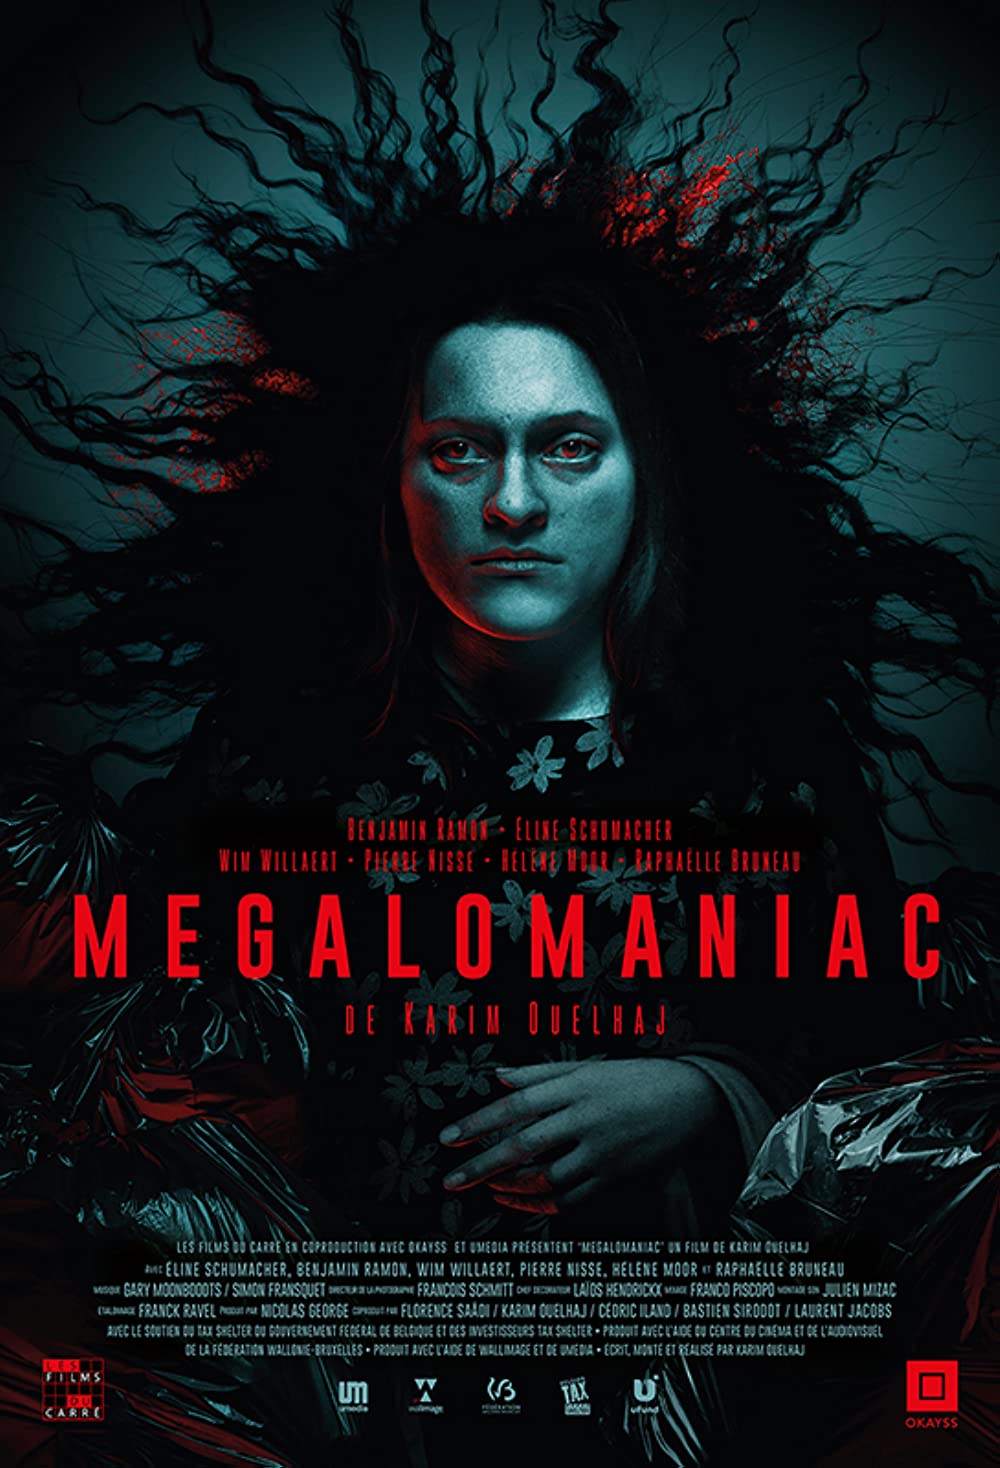 Poster Imagine Film Festival: Megalomaniac